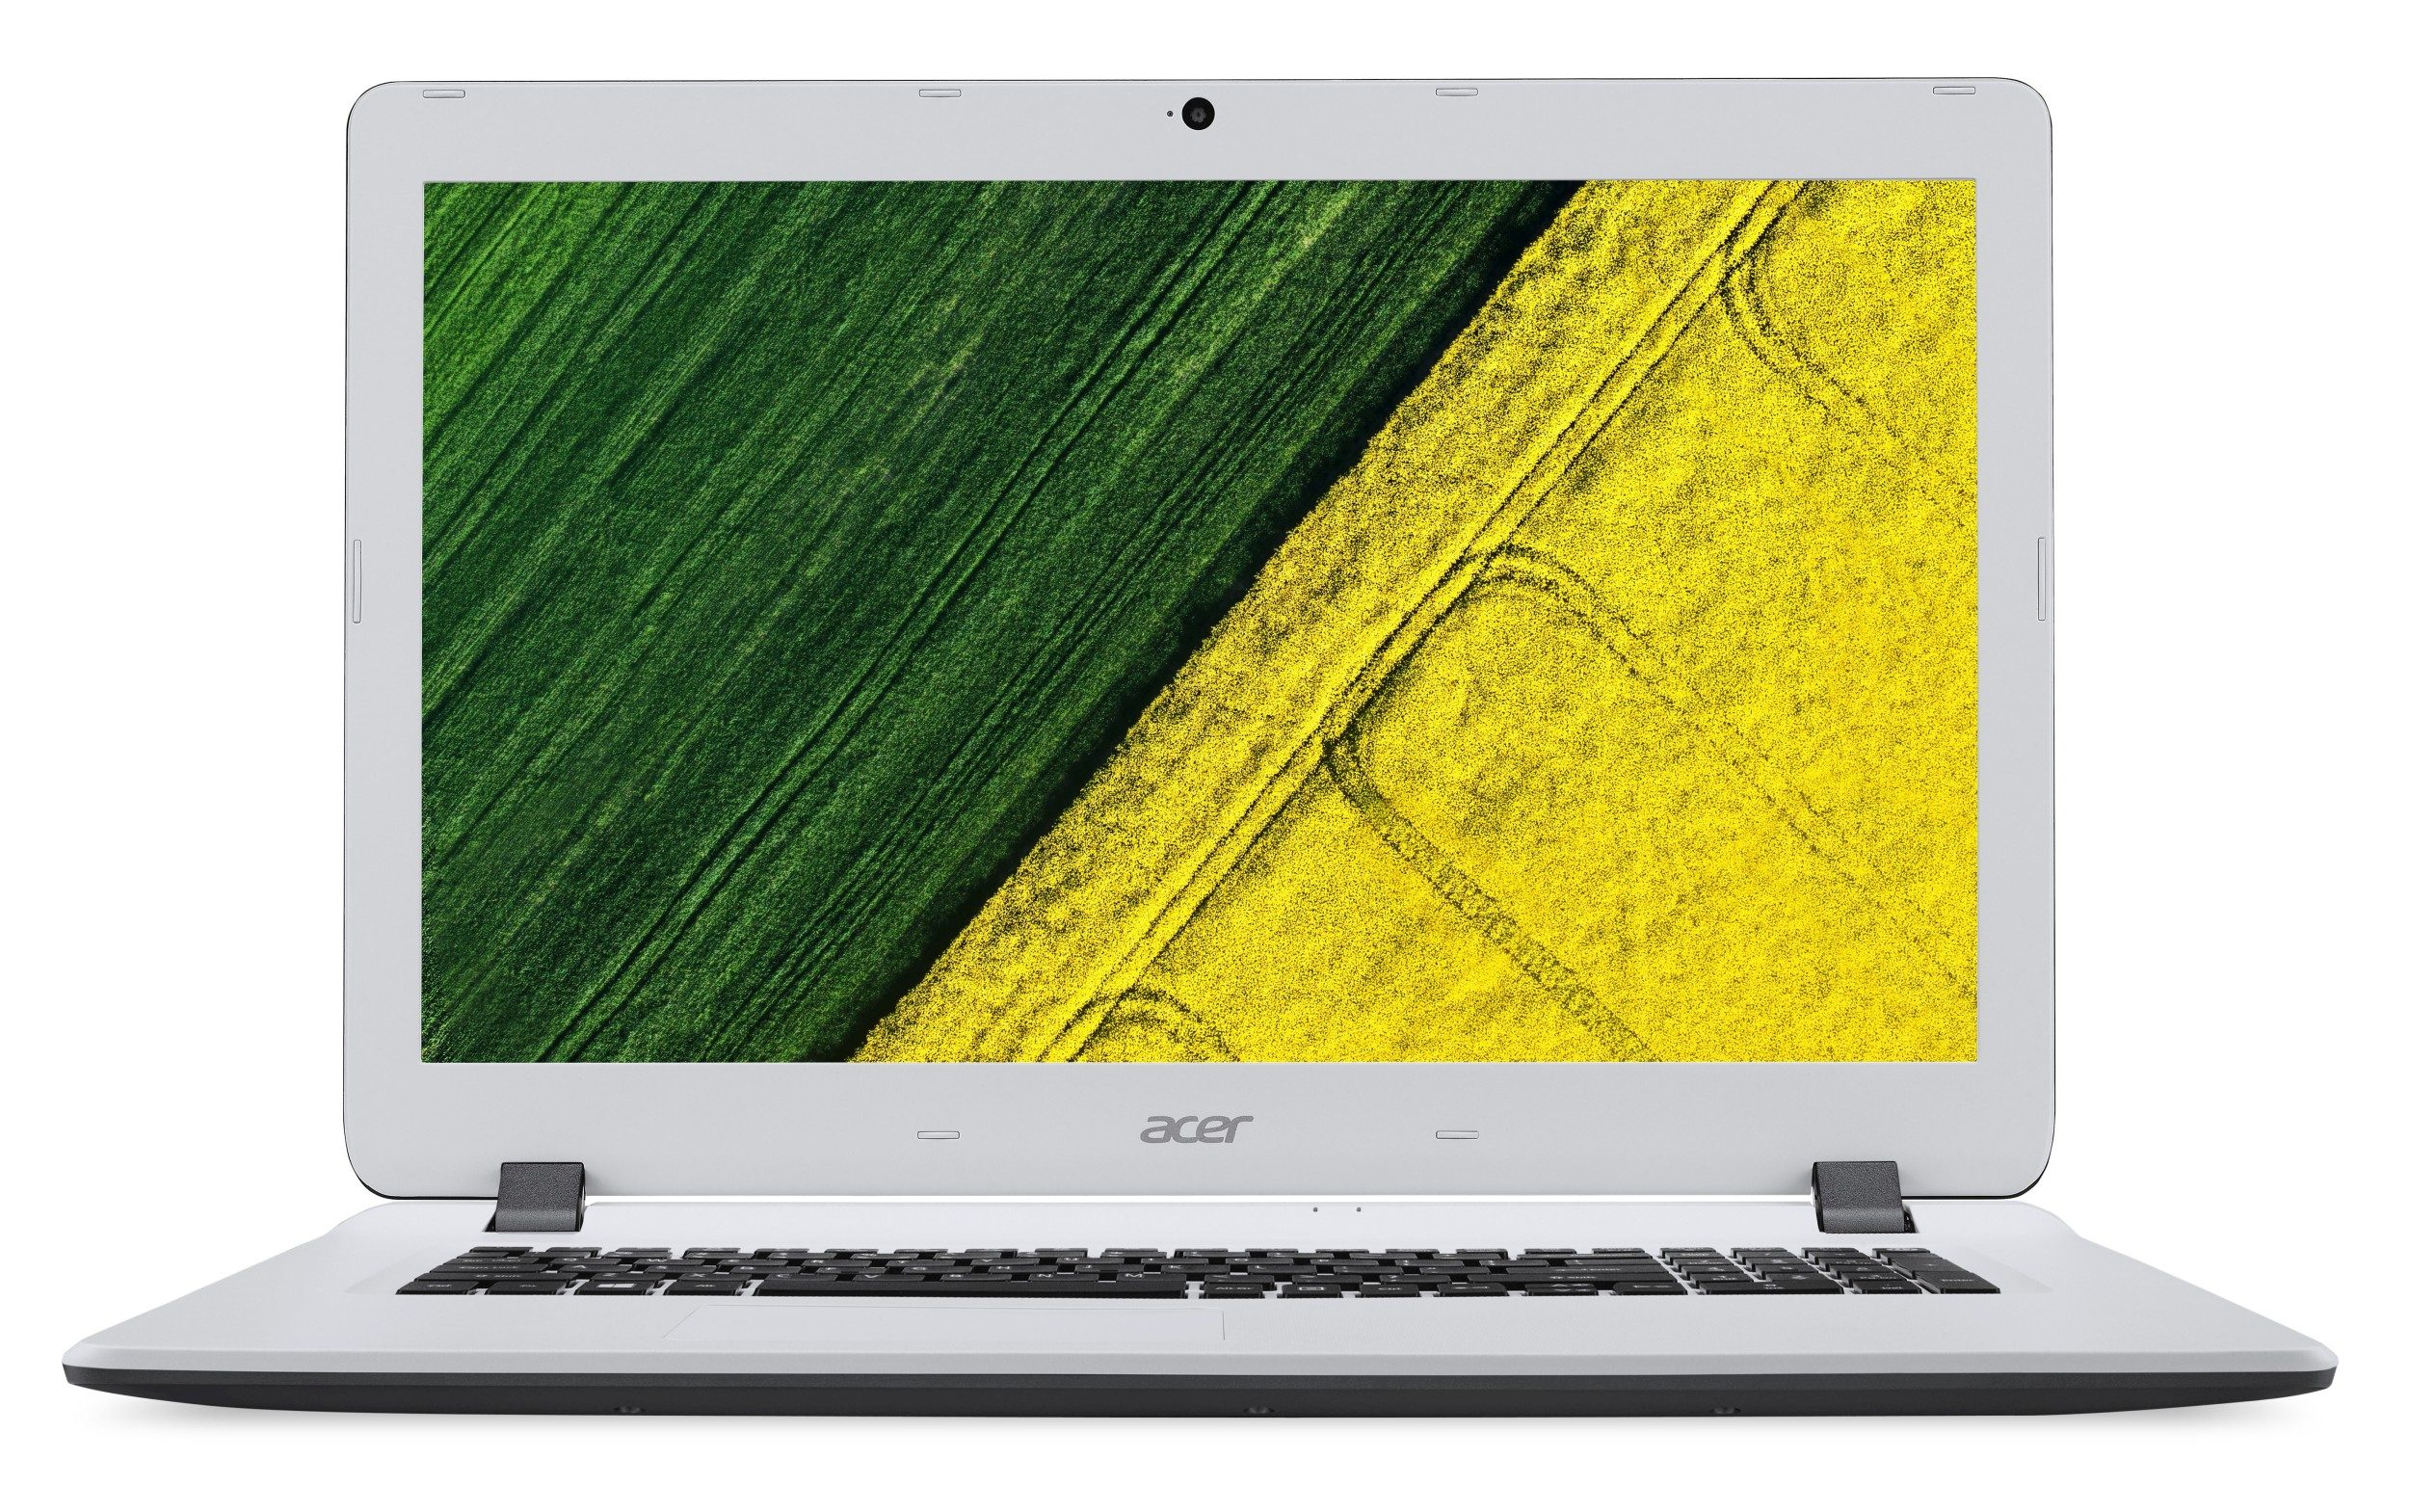 Notebook Acer Aspire ES 17 17,3, N3450, 4GB, 1TB, W10 černo-bílý NX.GH6EC.002